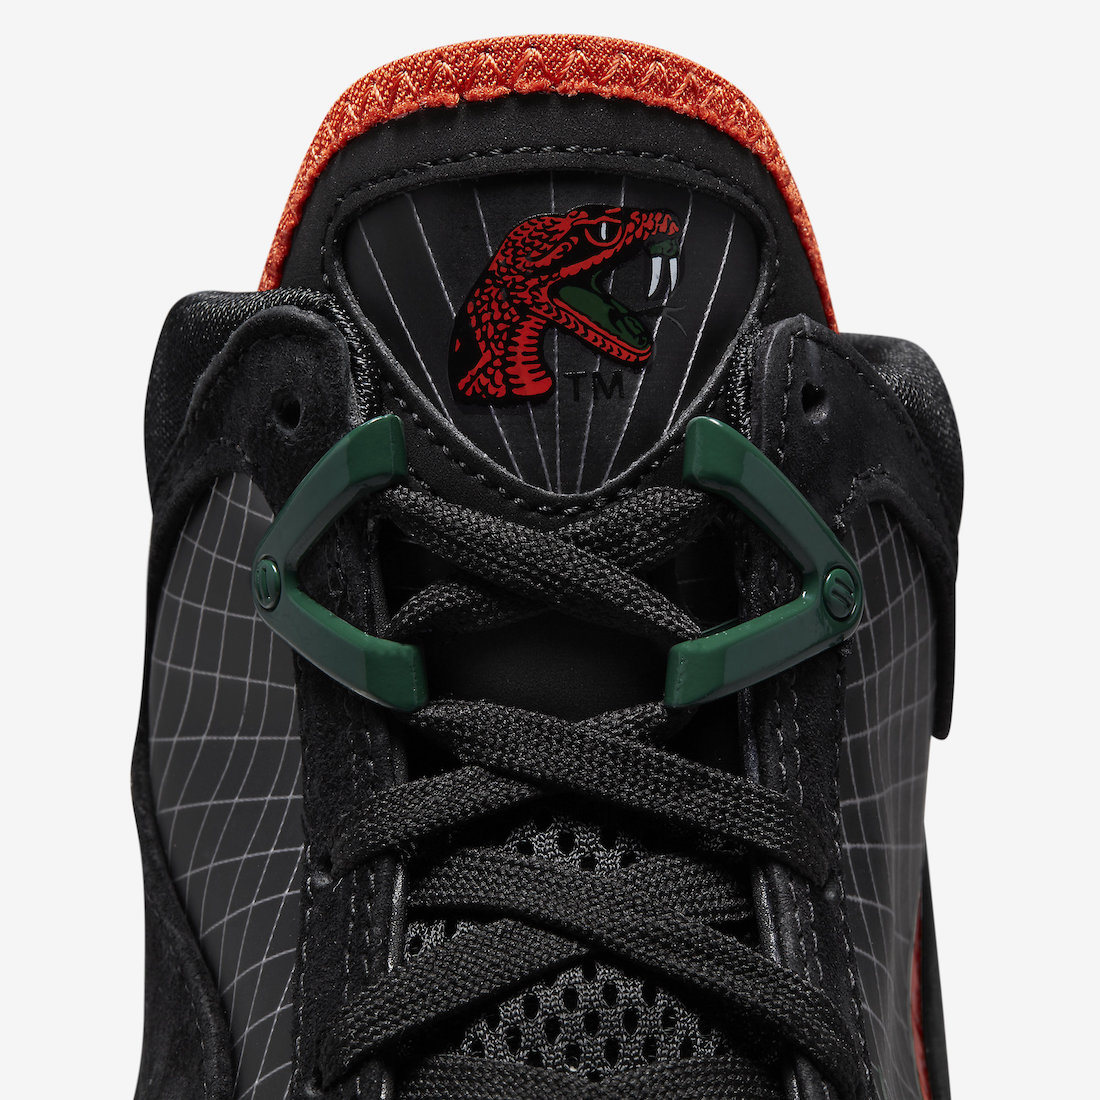 Nike LeBron 7 FAMU Florida AM DX8554-001 Release Date Tongue